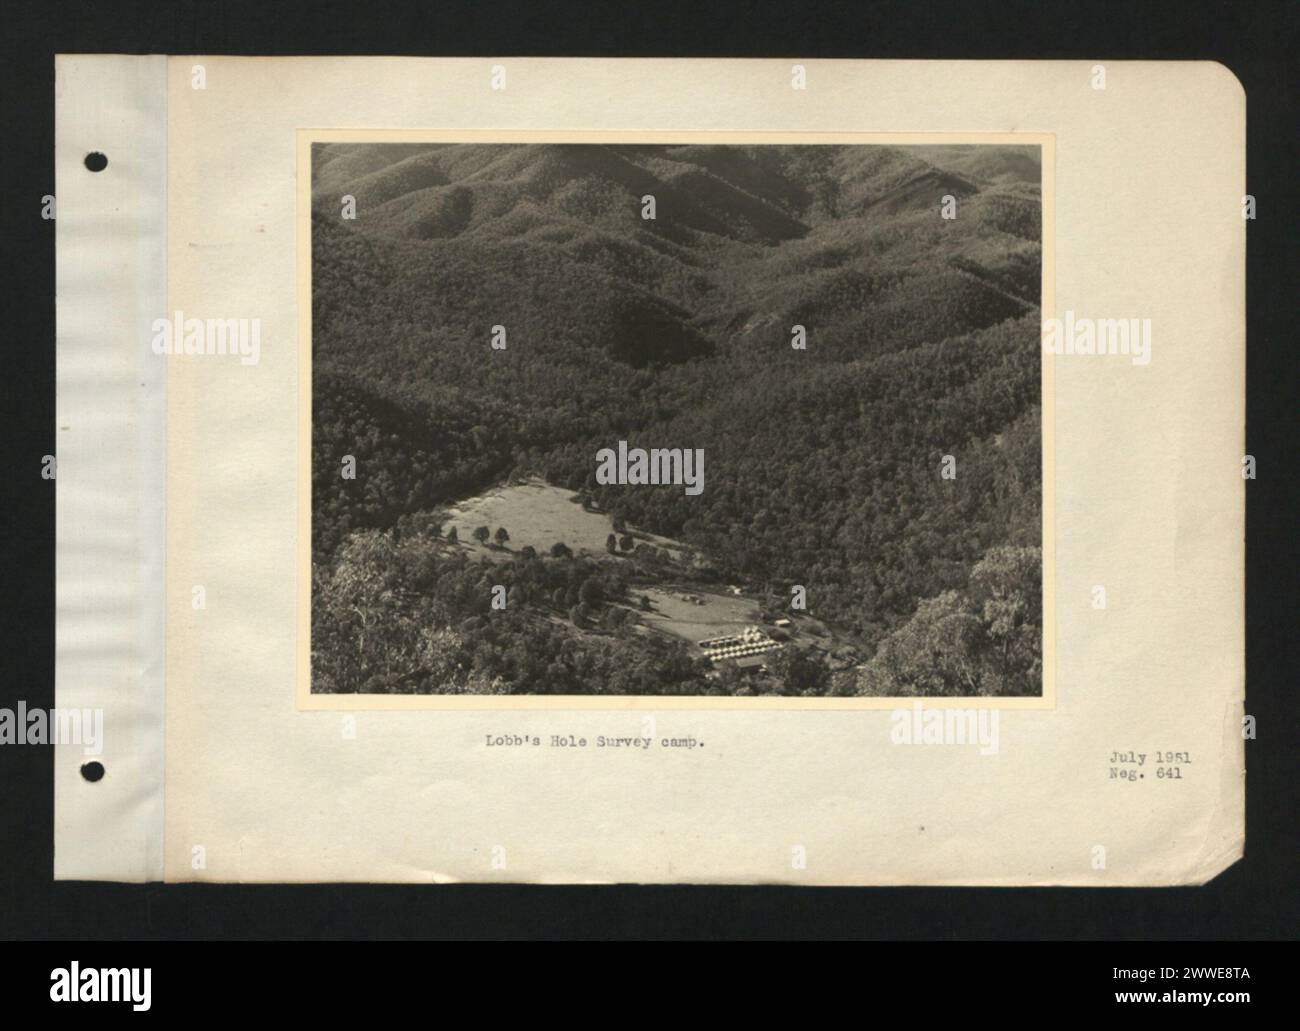 Description: Lobb's Hole Survey camp. Location: Lobb's Hole, Australia Date: July 1951 australia, australasia, oceania, australasiathroughalens Stock Photo